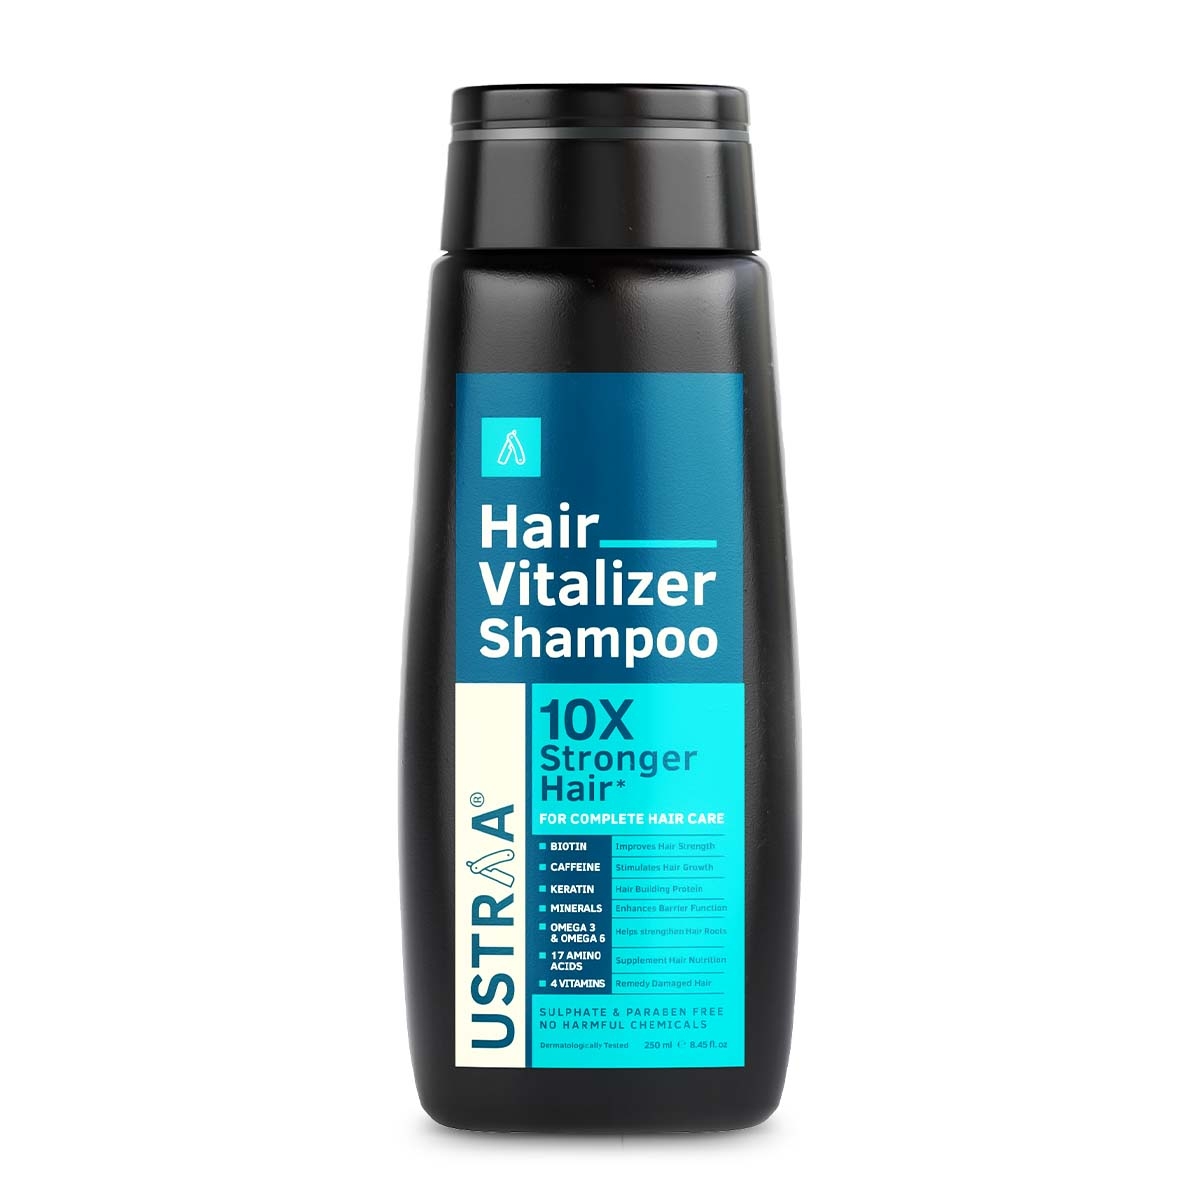 Ustraa | Ustraa Hair Vitalizer Shampoo - 250ml & Face Scrub De Tan - 100g 1